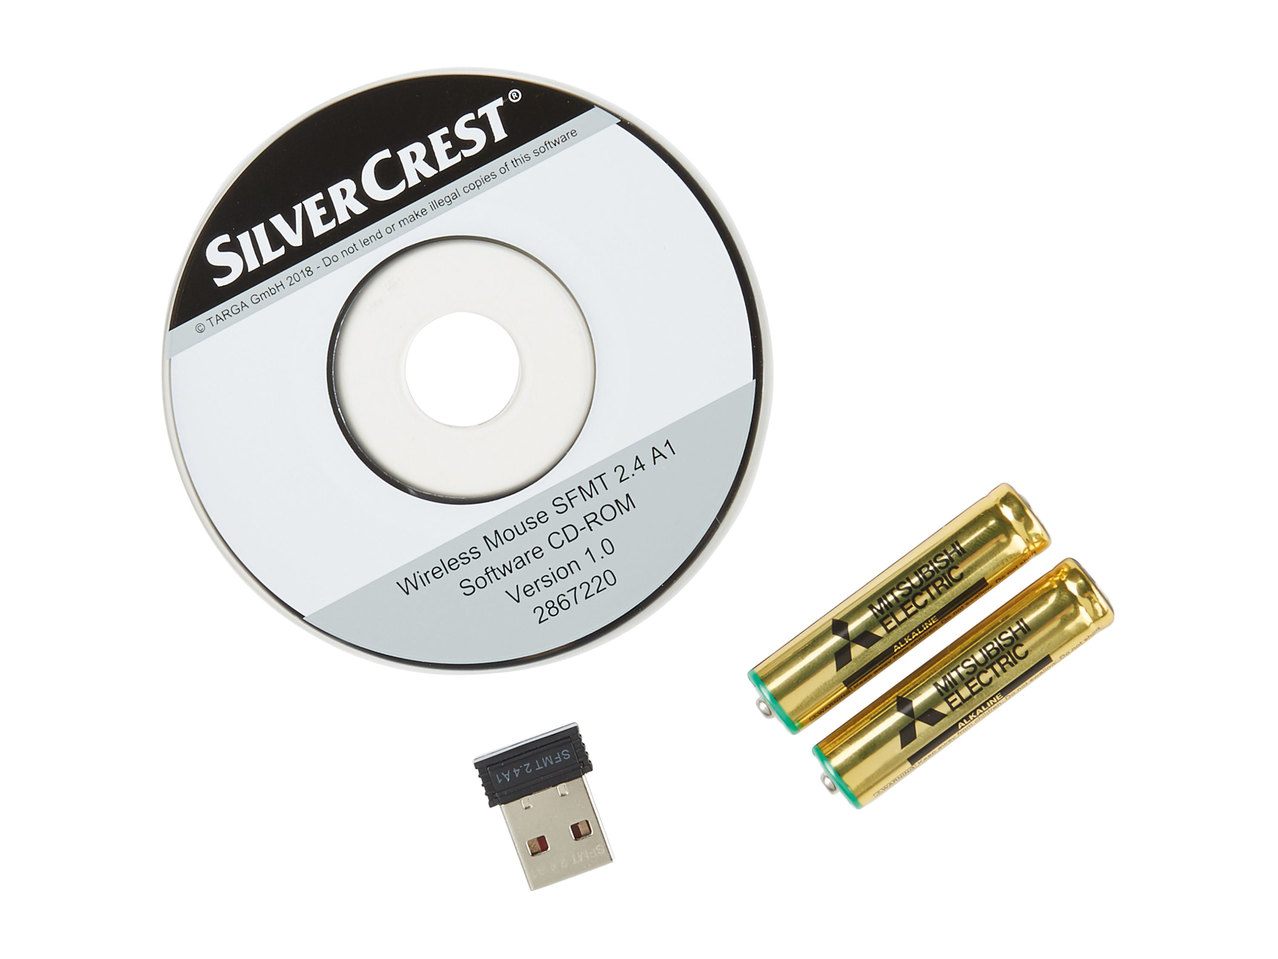 Silvercrest Wireless Mouse1